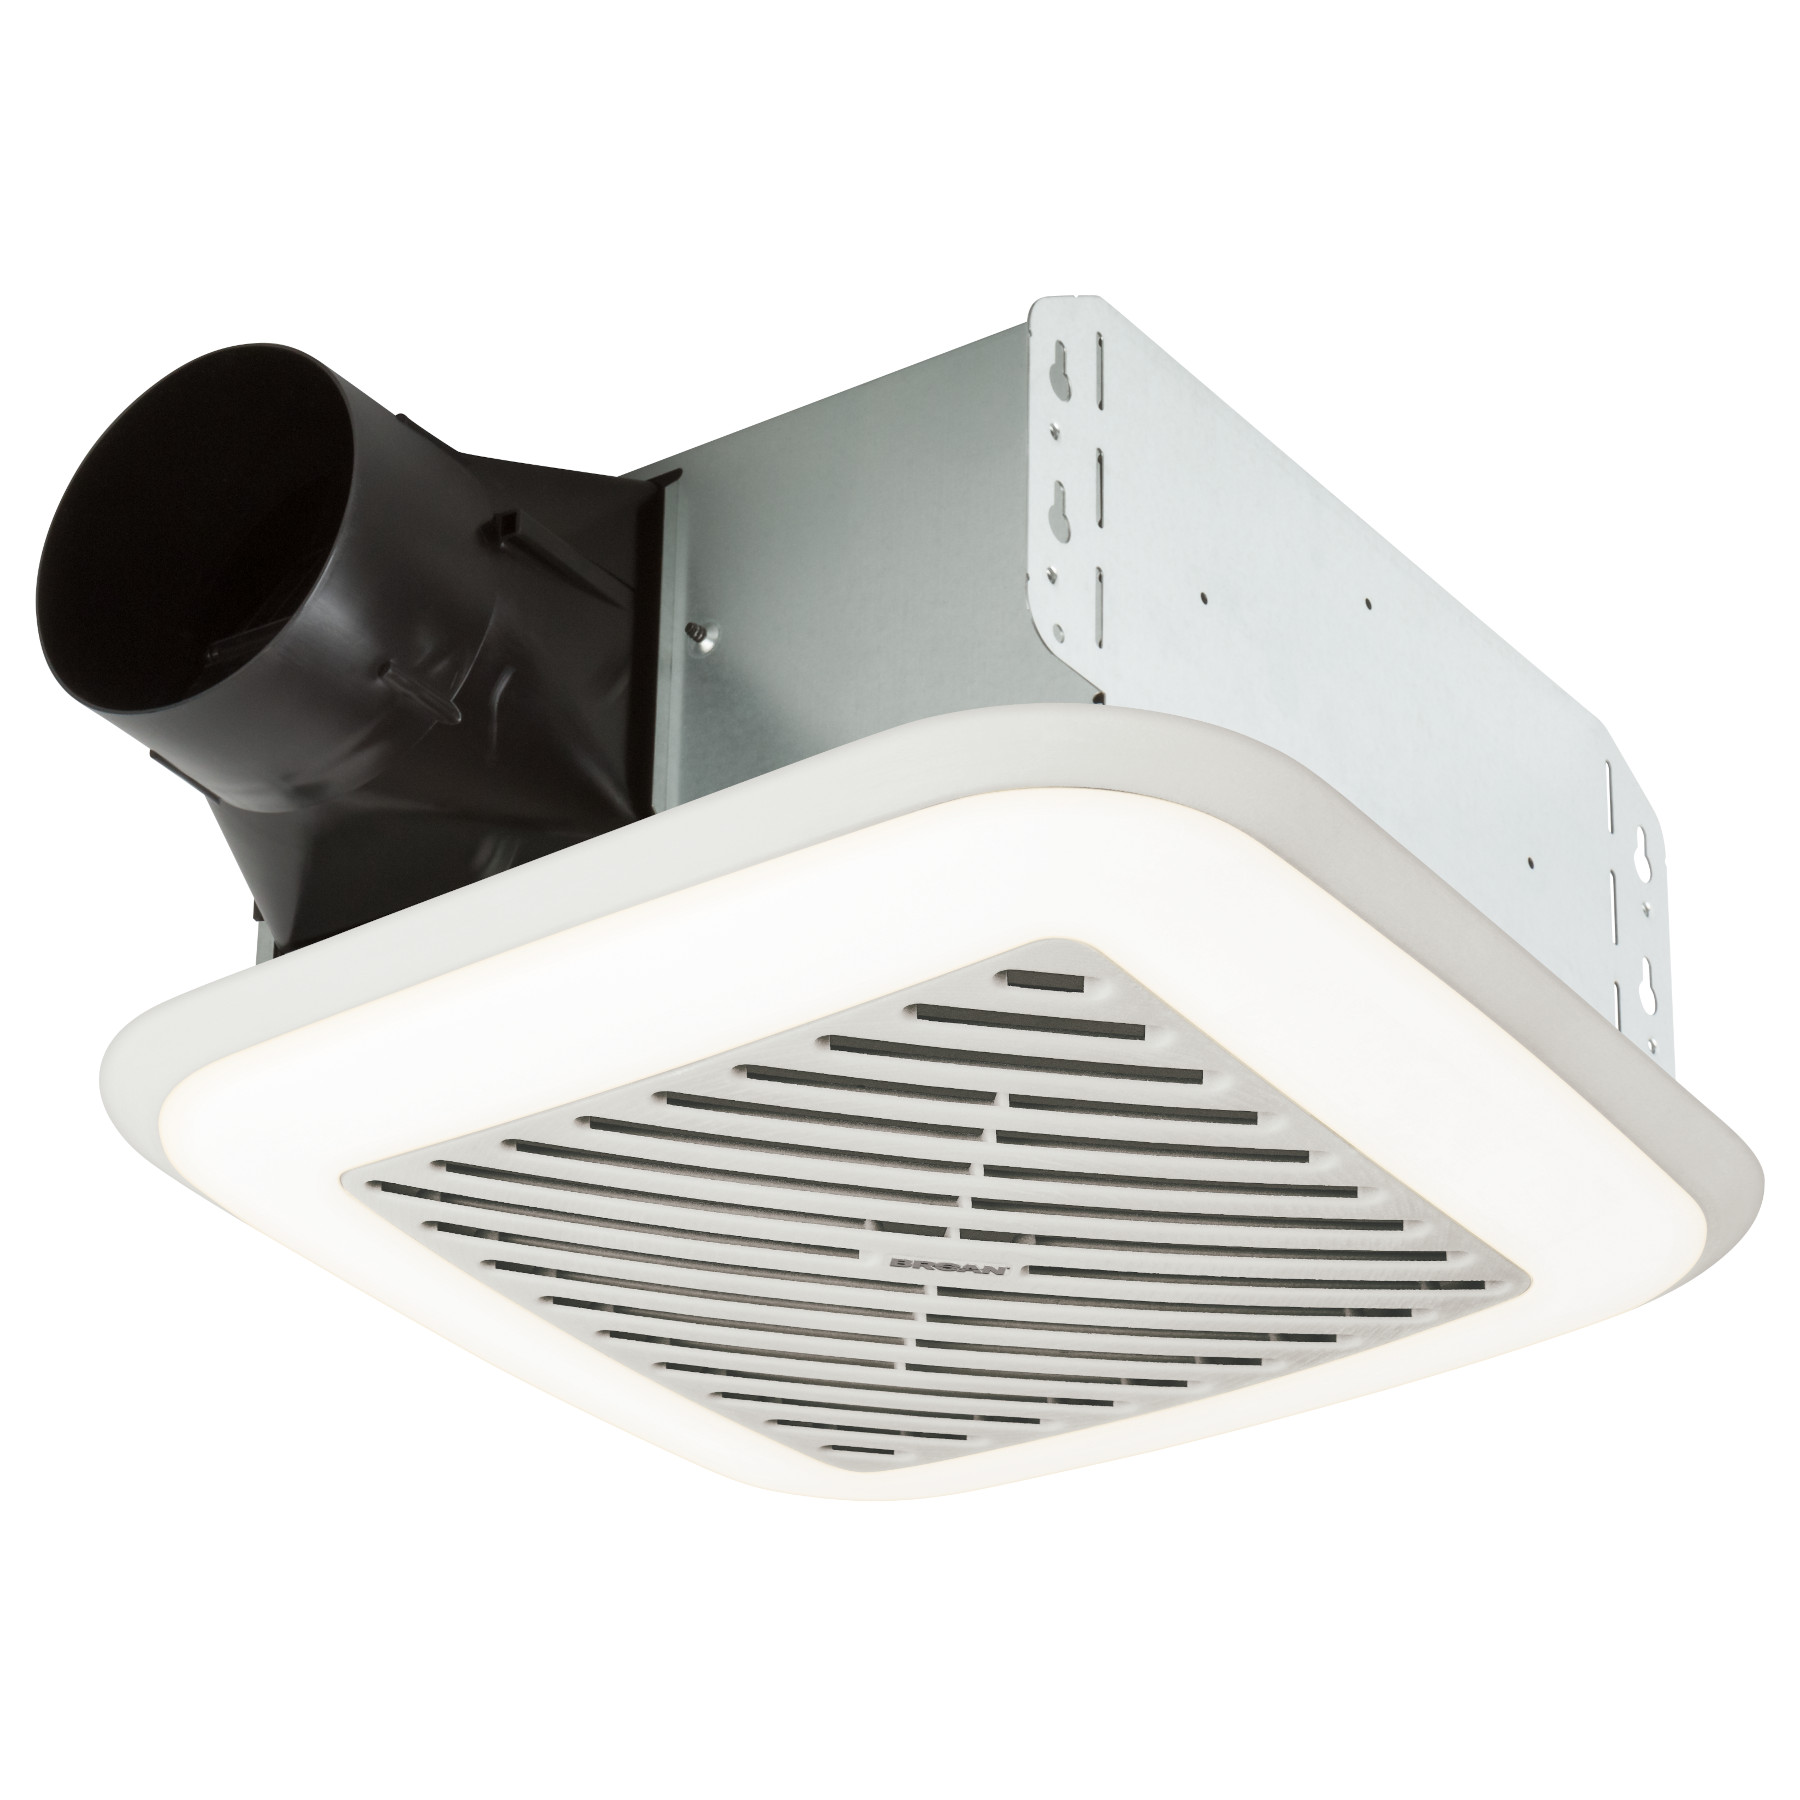 791LEDM Broan® Flex Series 110 CFM Ventilation Fan with Soft